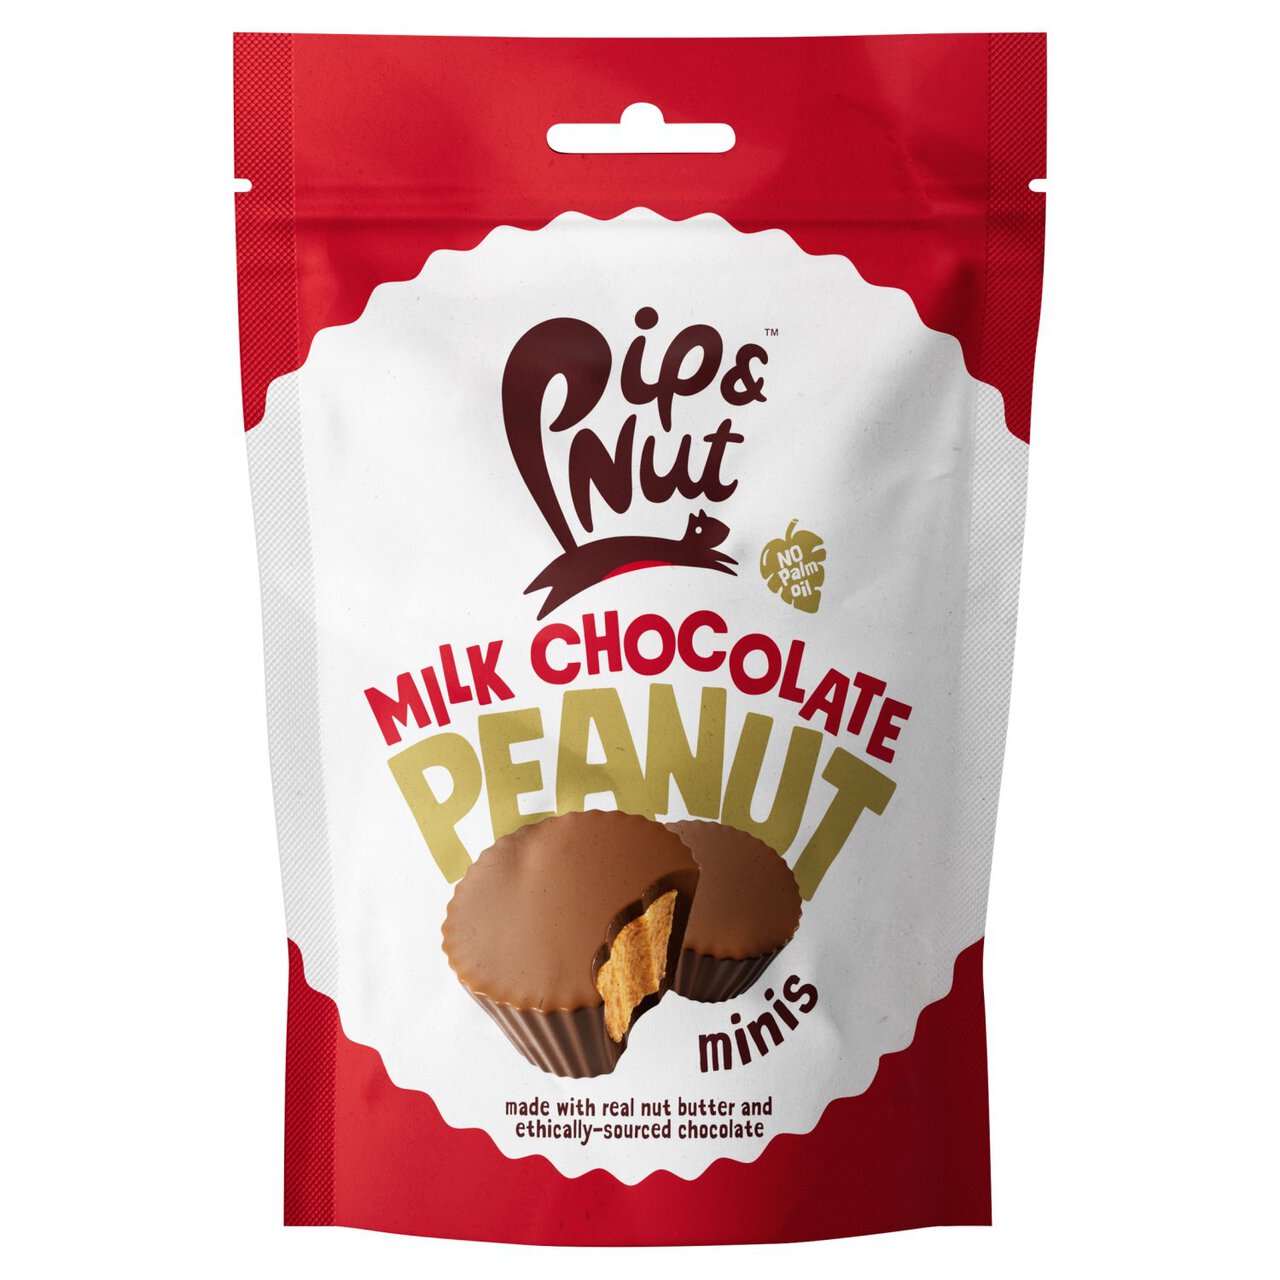 Pip & Nut Mini Milk Chocolate Peanut Butter Cups 88g